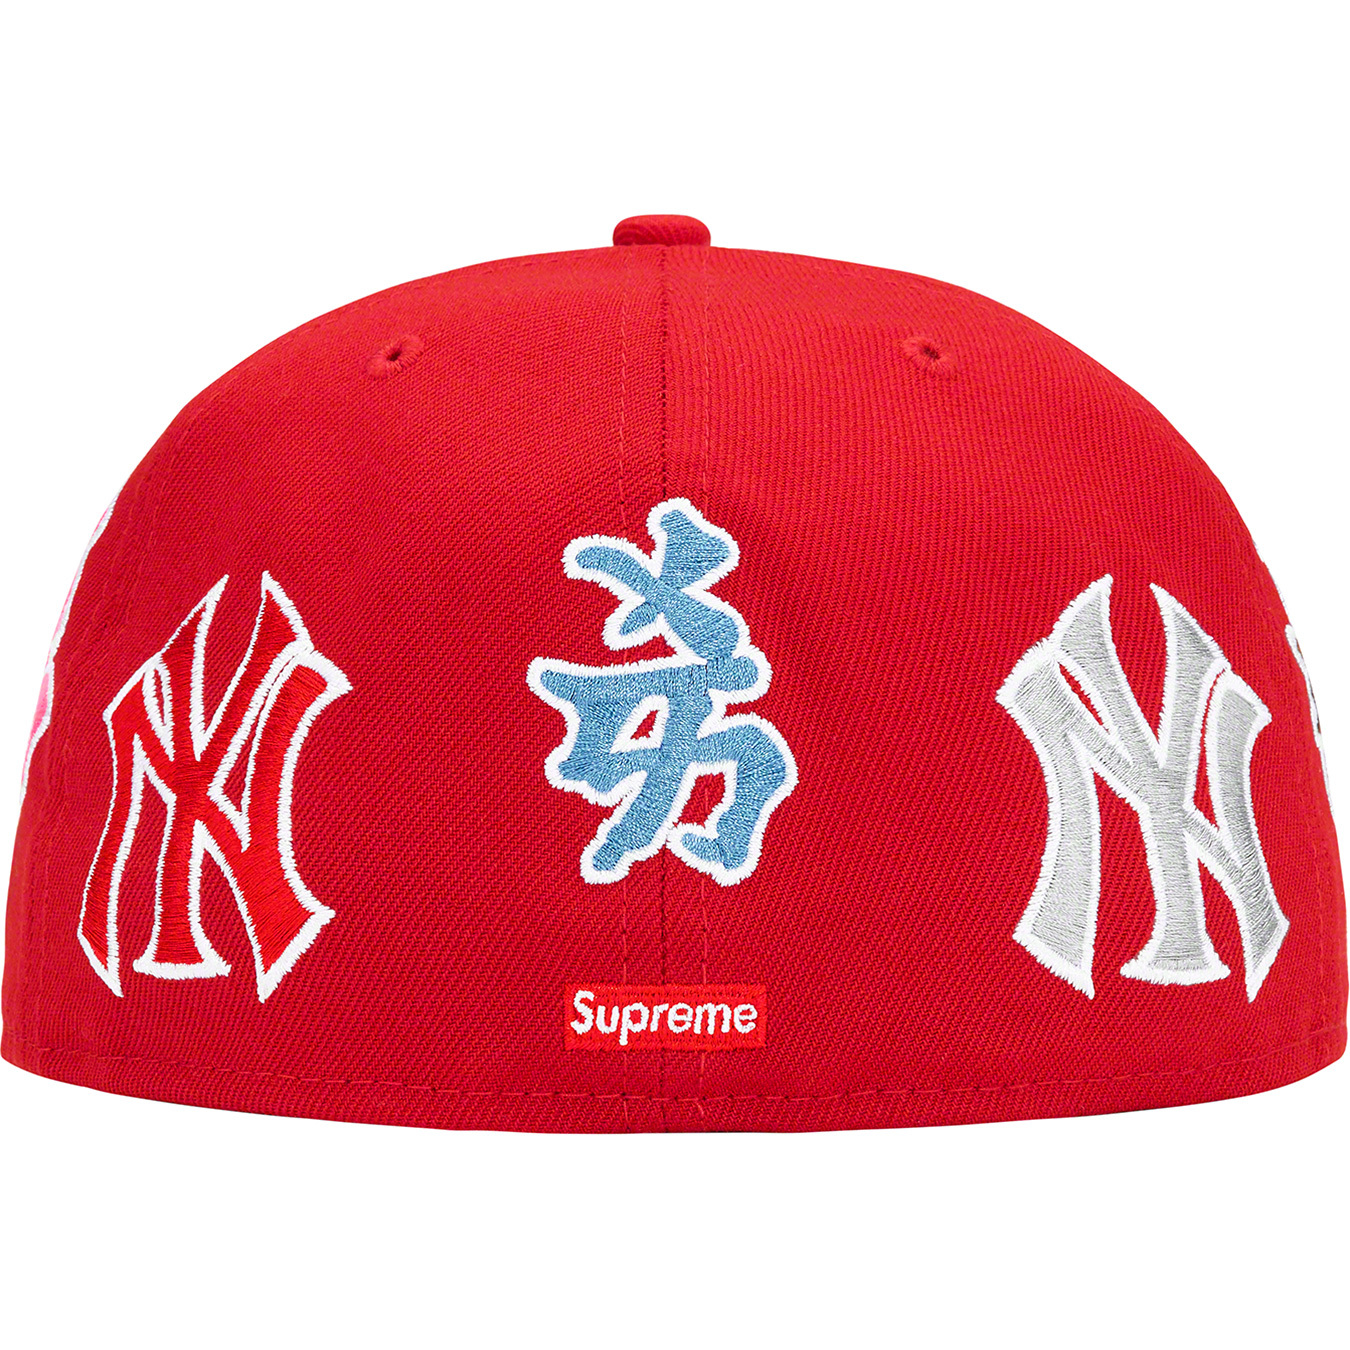 Supreme newera キャップ ヤンキースコラボ - 帽子